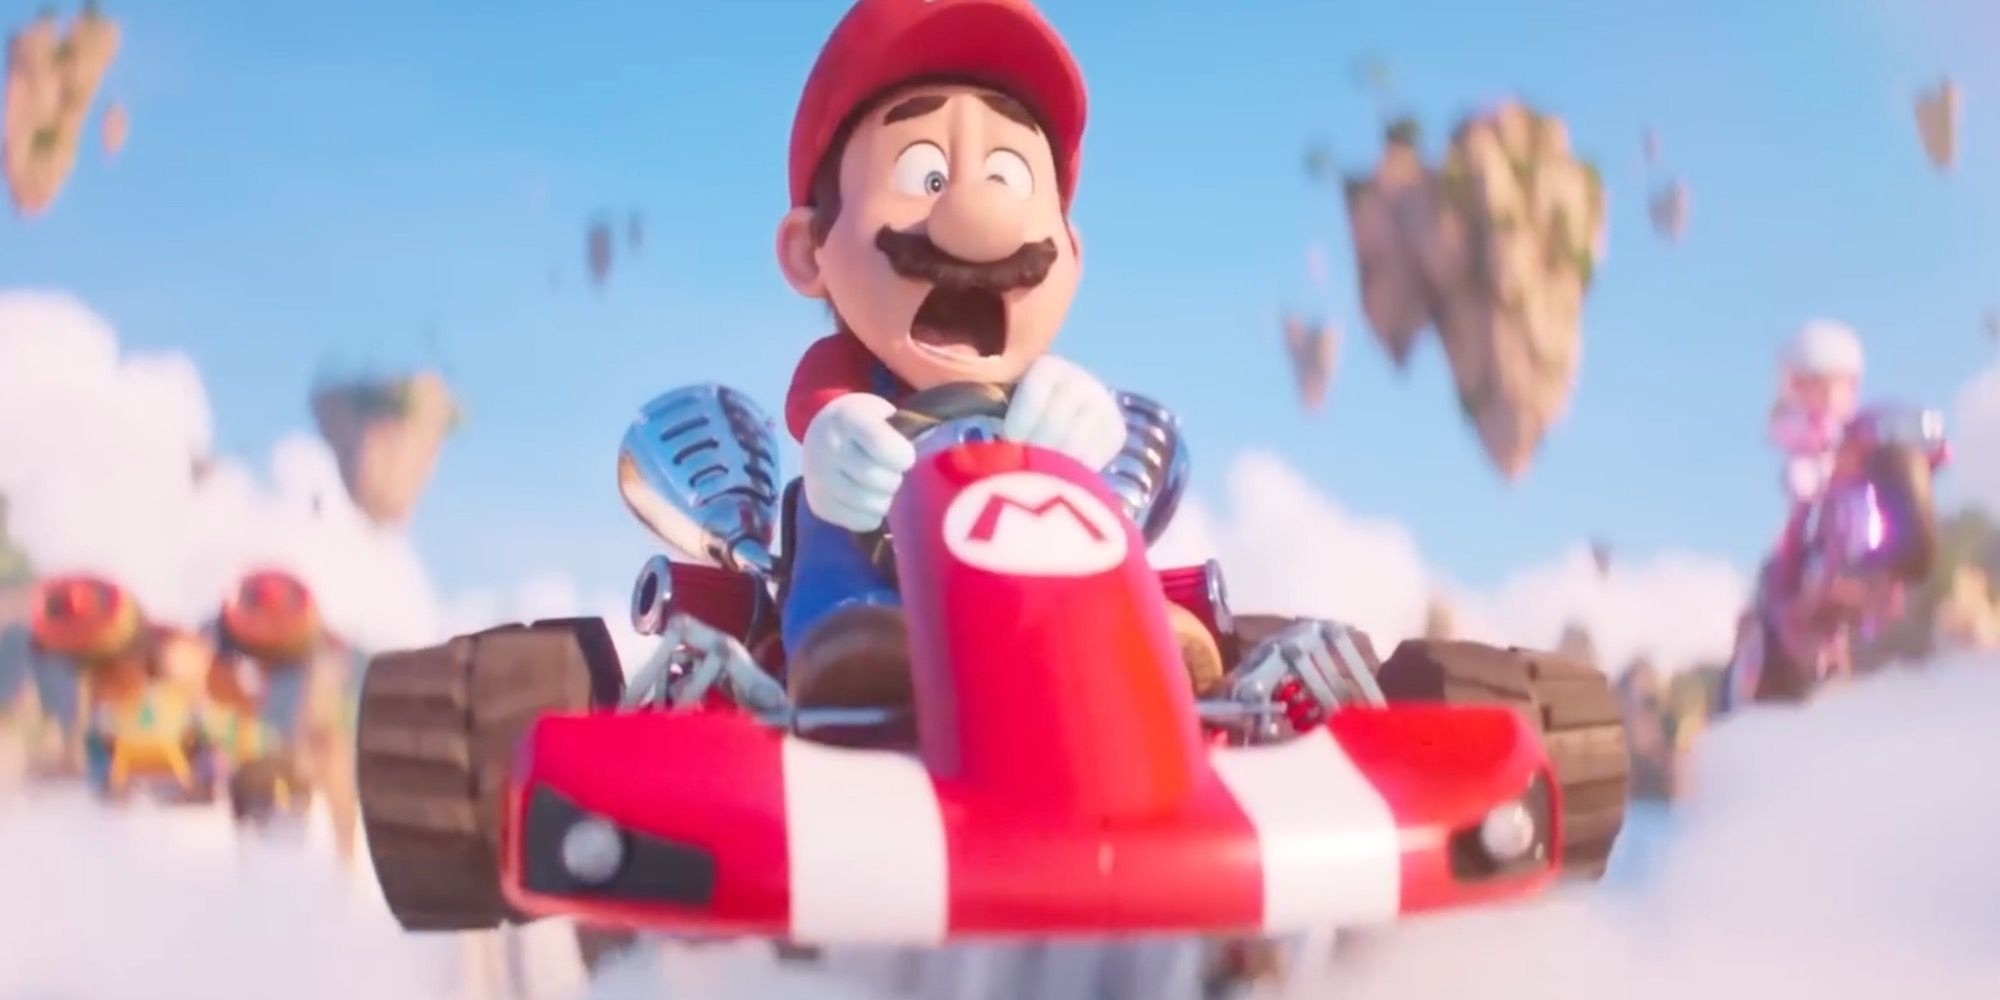 Mario driving a kart in The Super Mario Bros. Movie